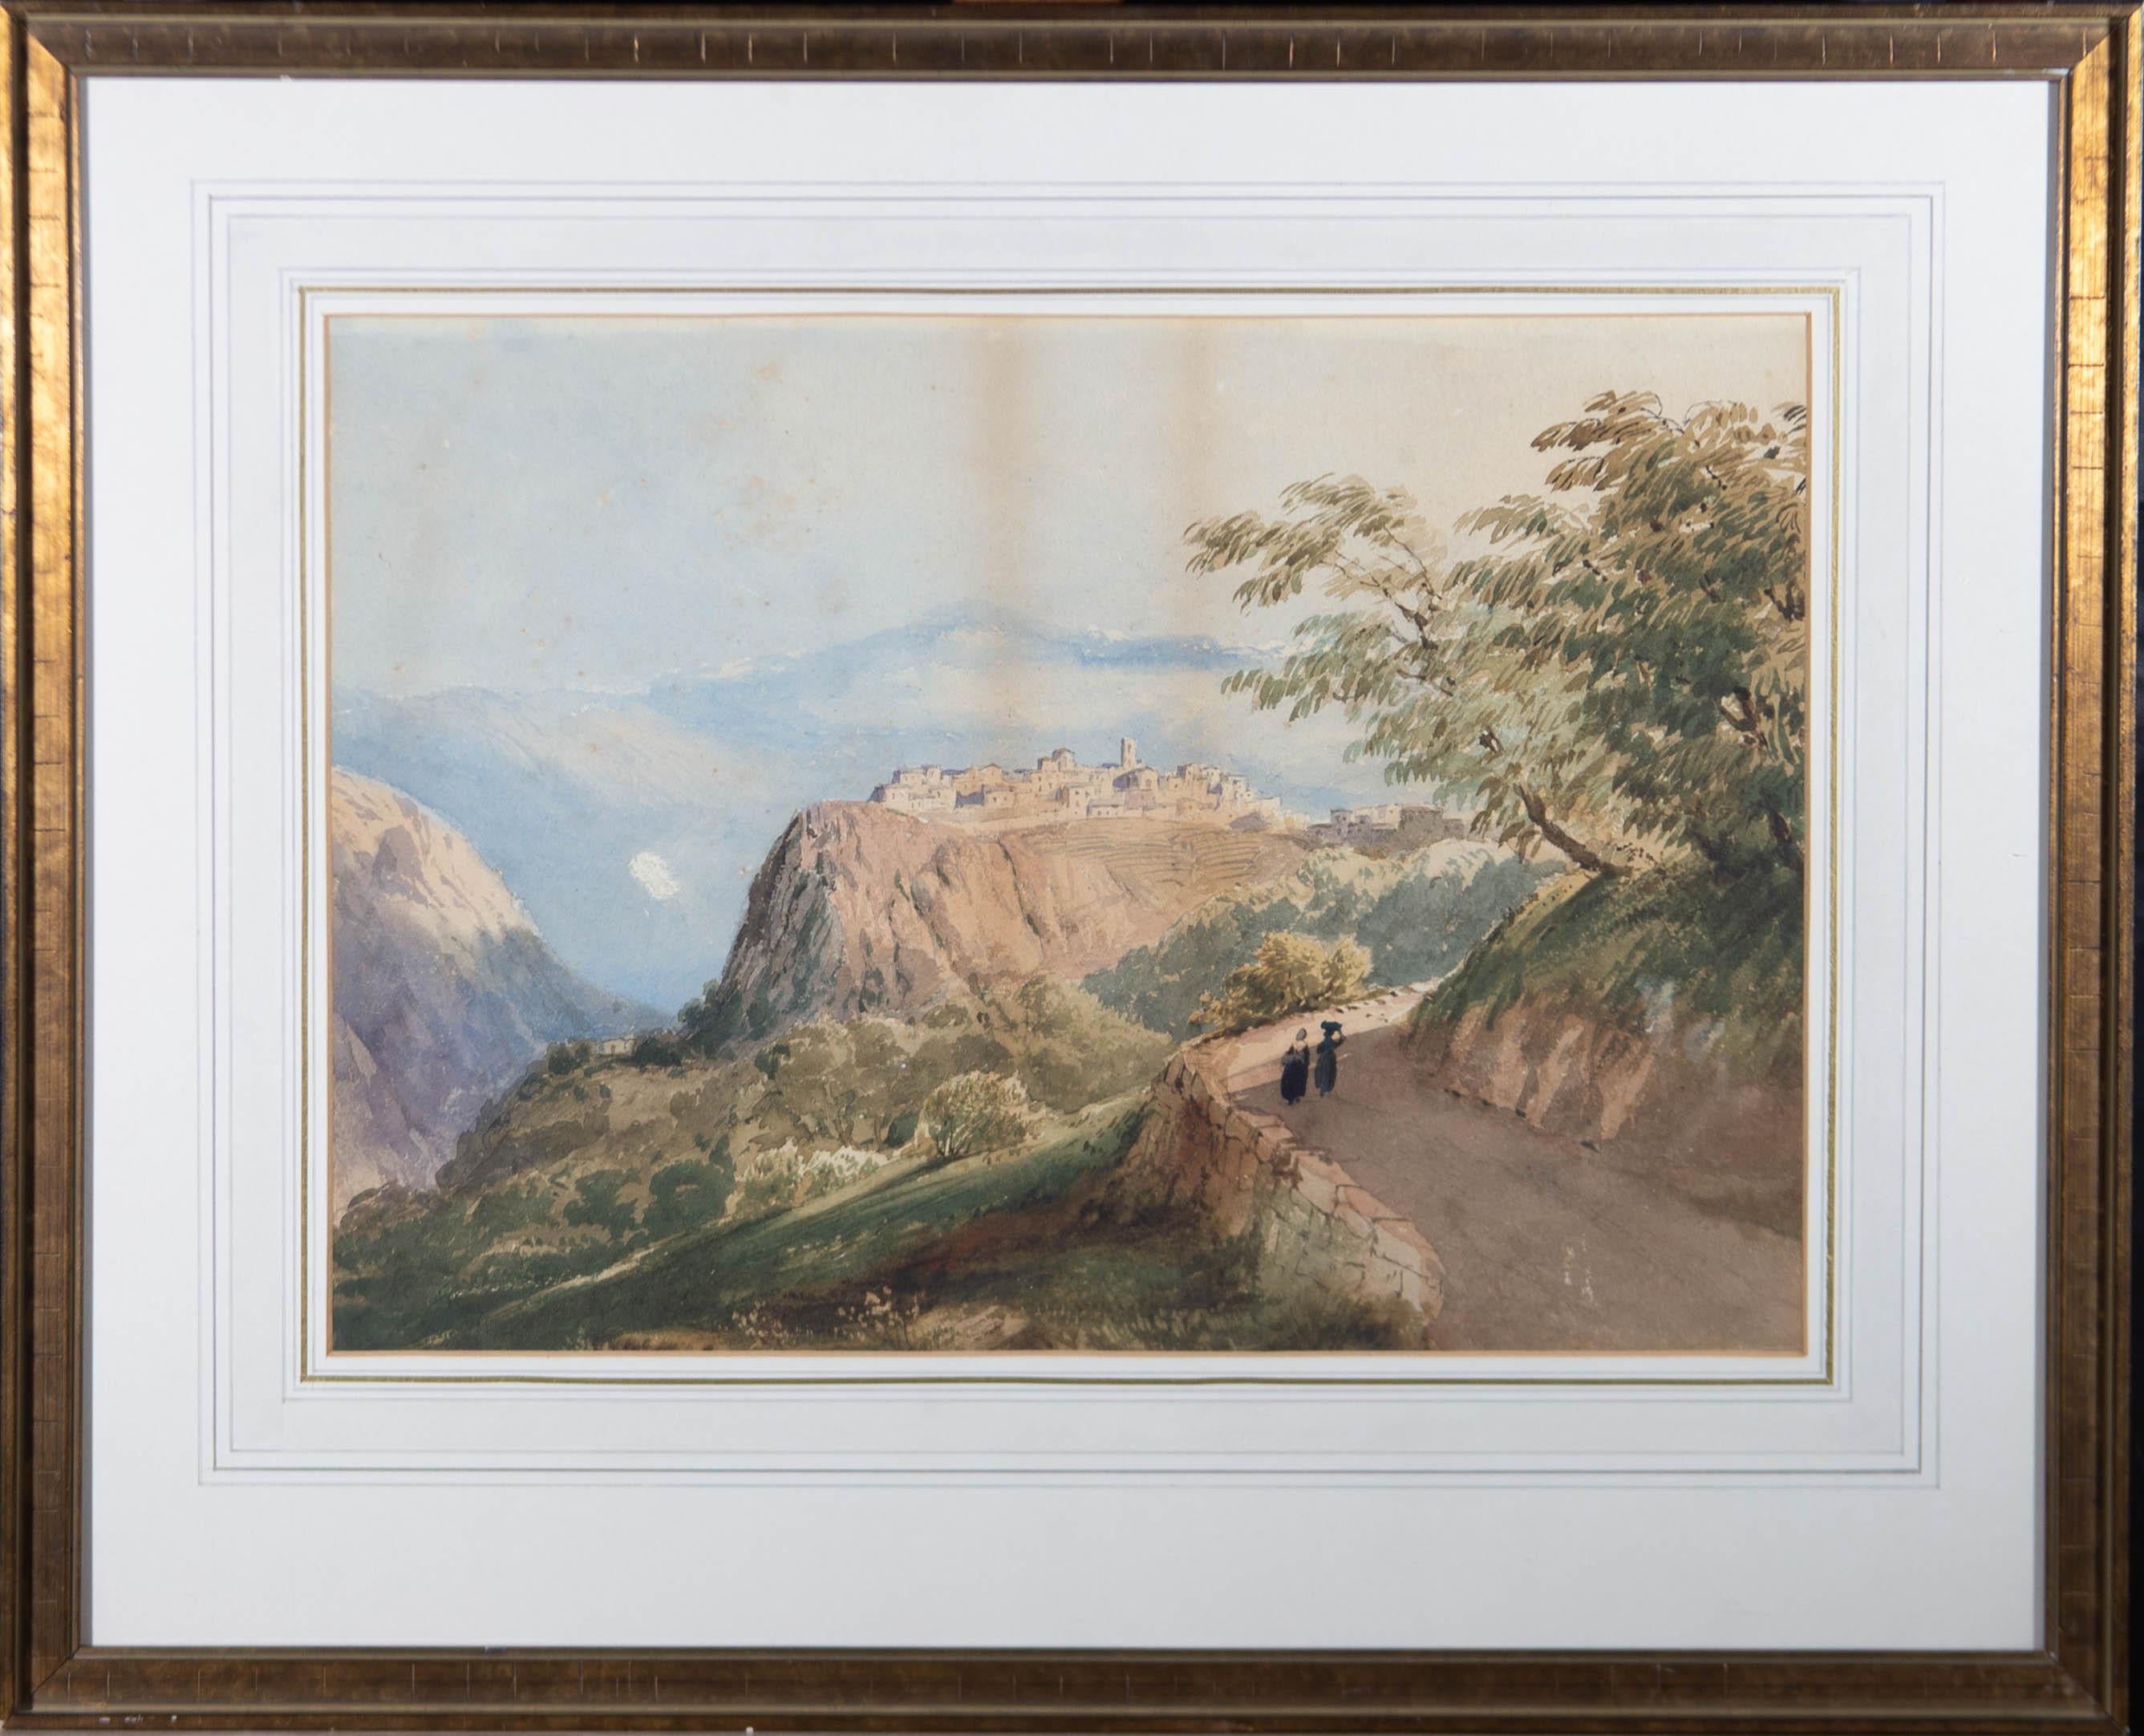 Unknown Landscape Art - 19th Century Watercolour - Italian Hilltop Town